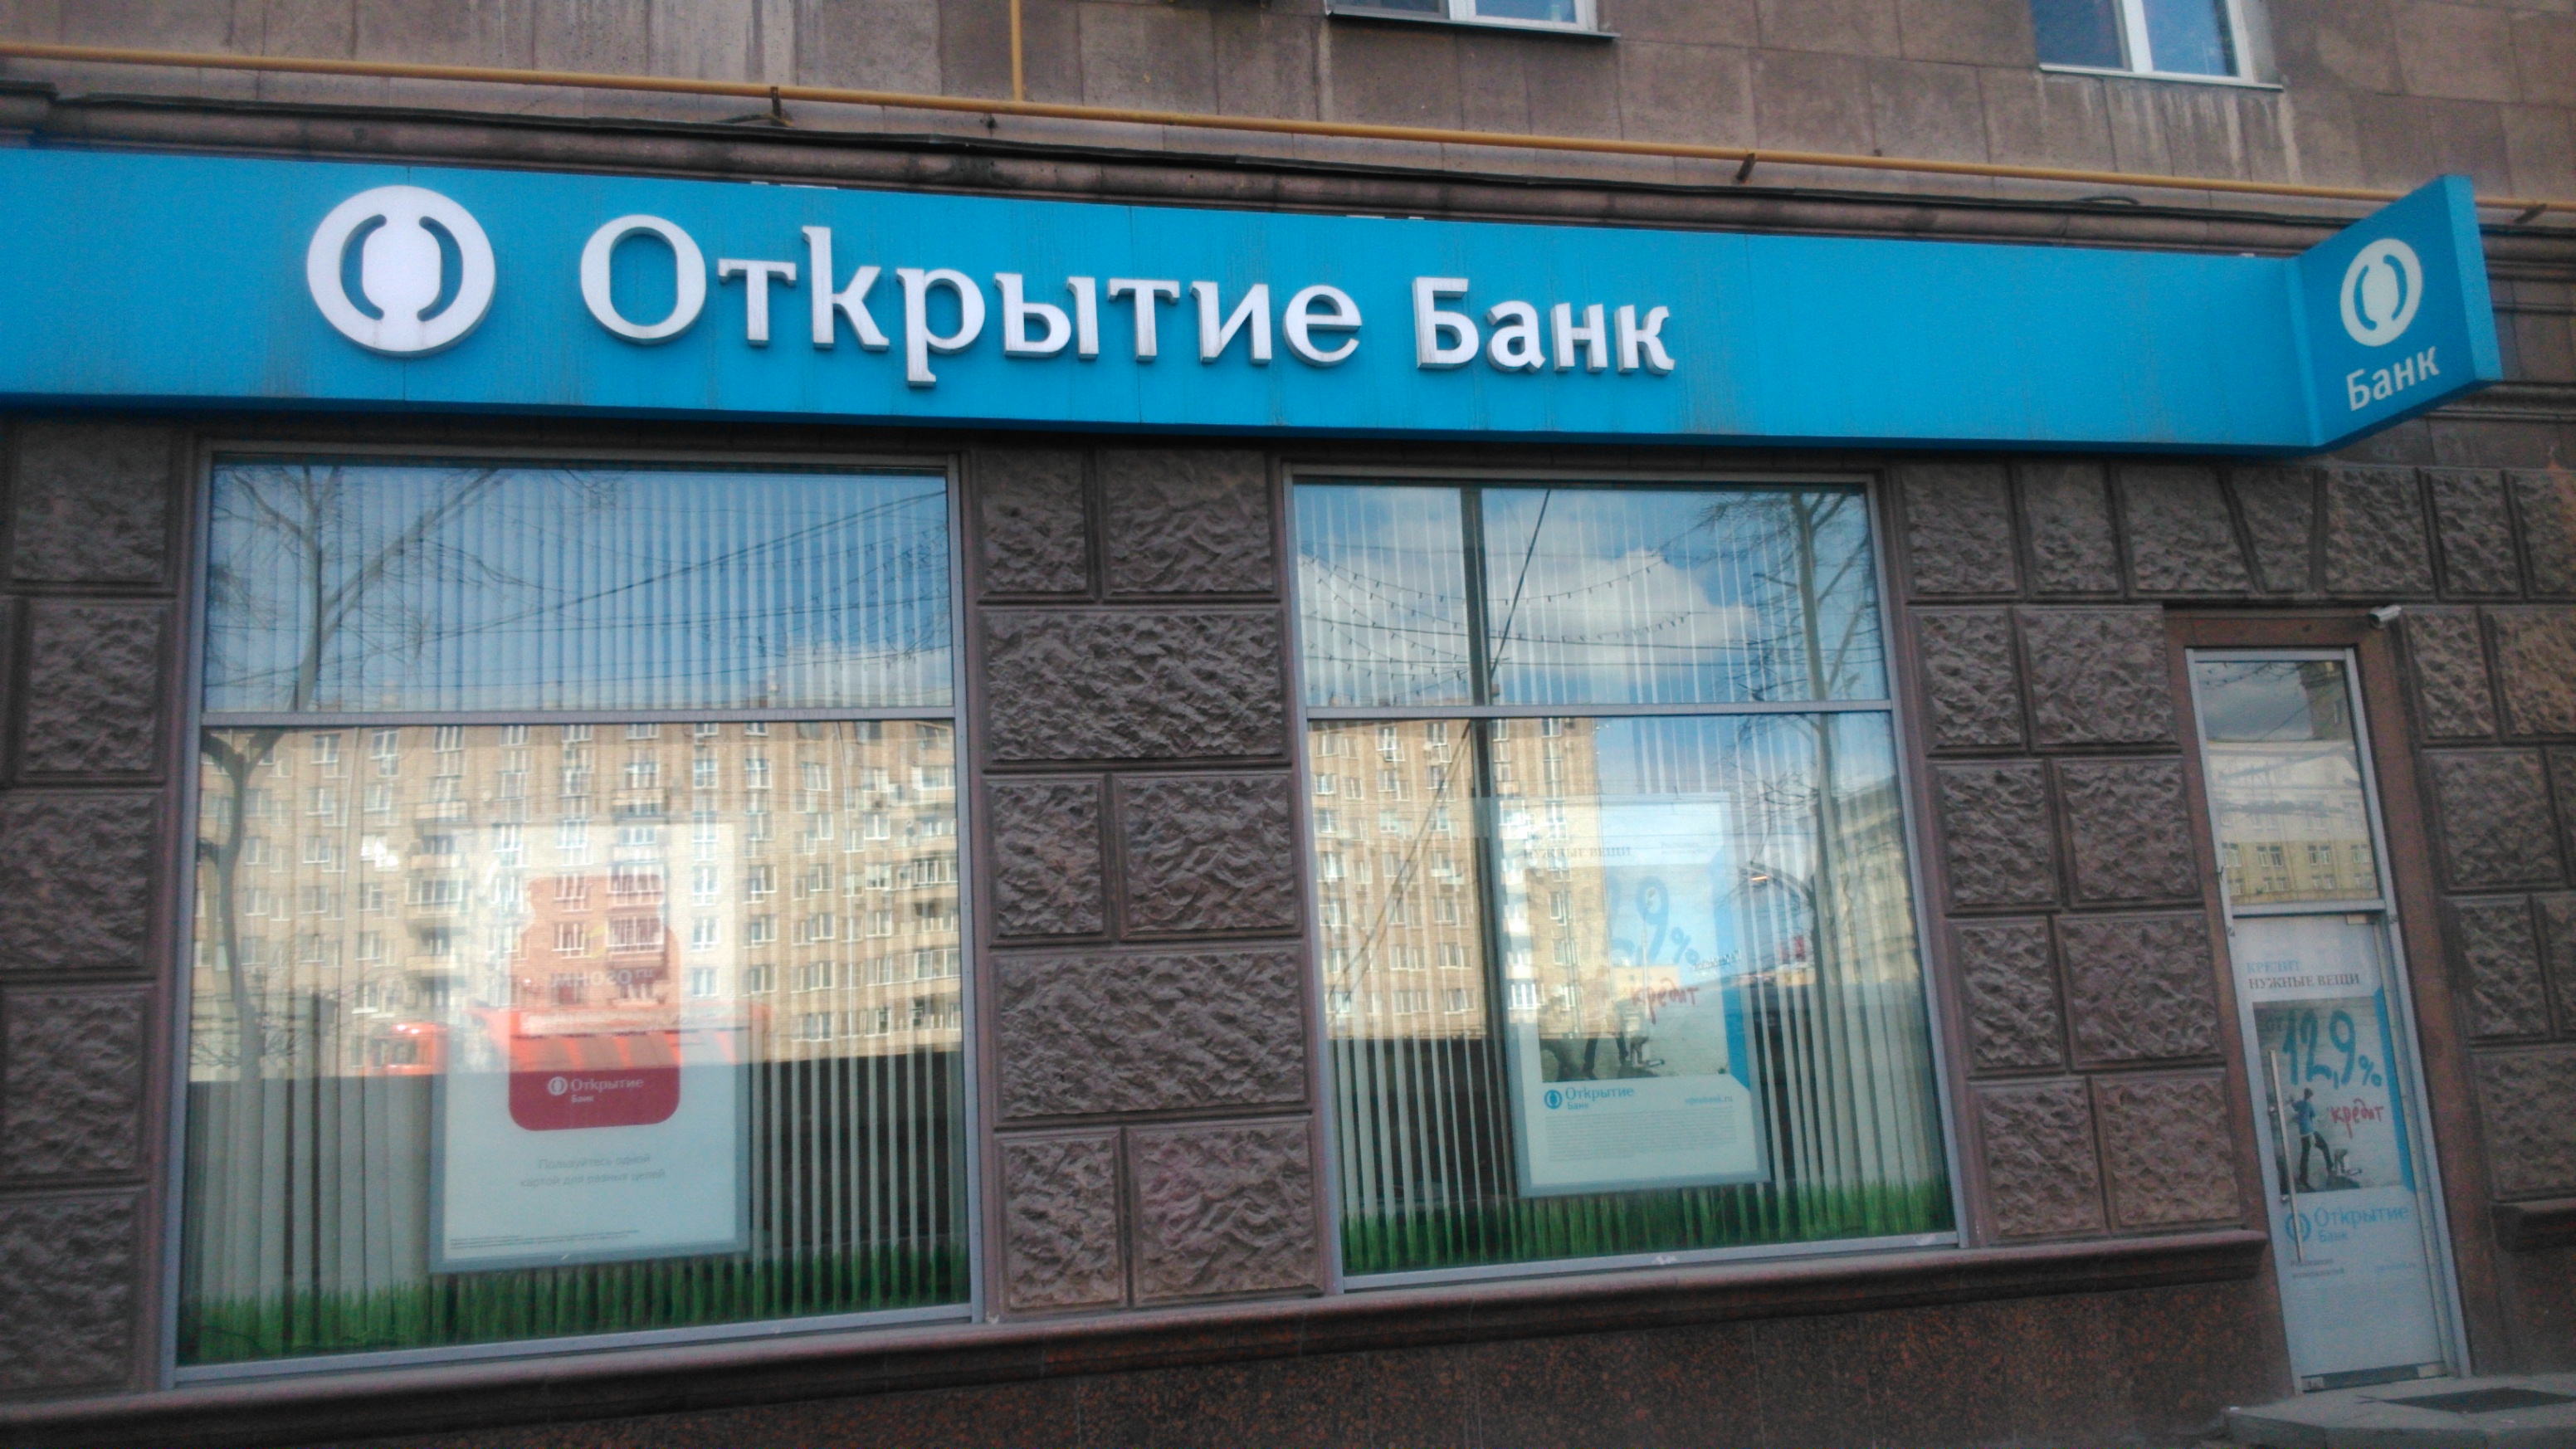 Ближайшее открыта банк. Банк. Банк открытие на Московской. Ближайший открытый банк.